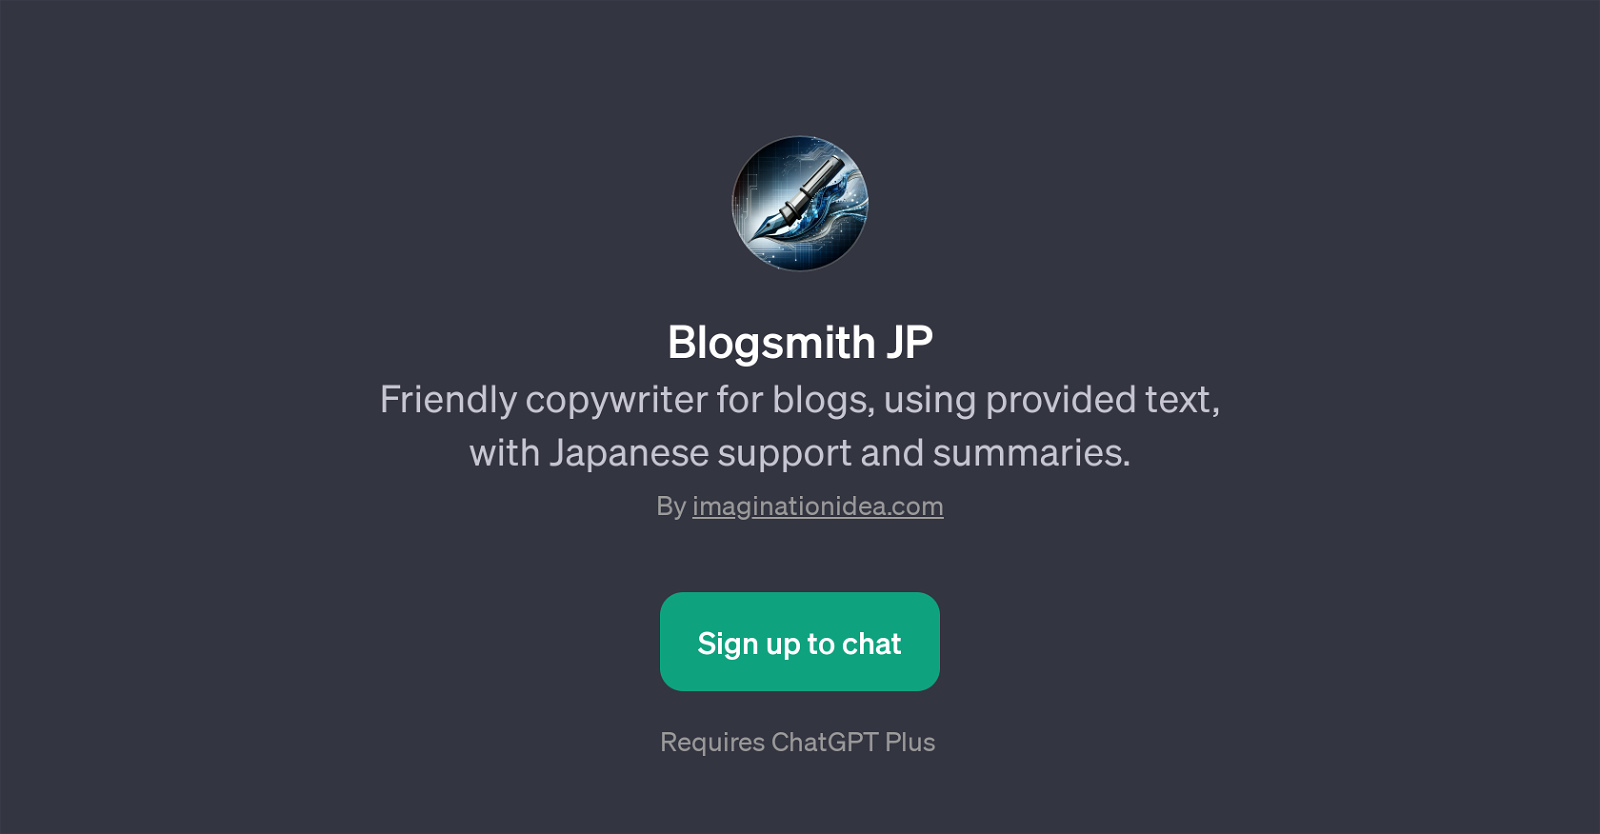 Blogsmith JP website